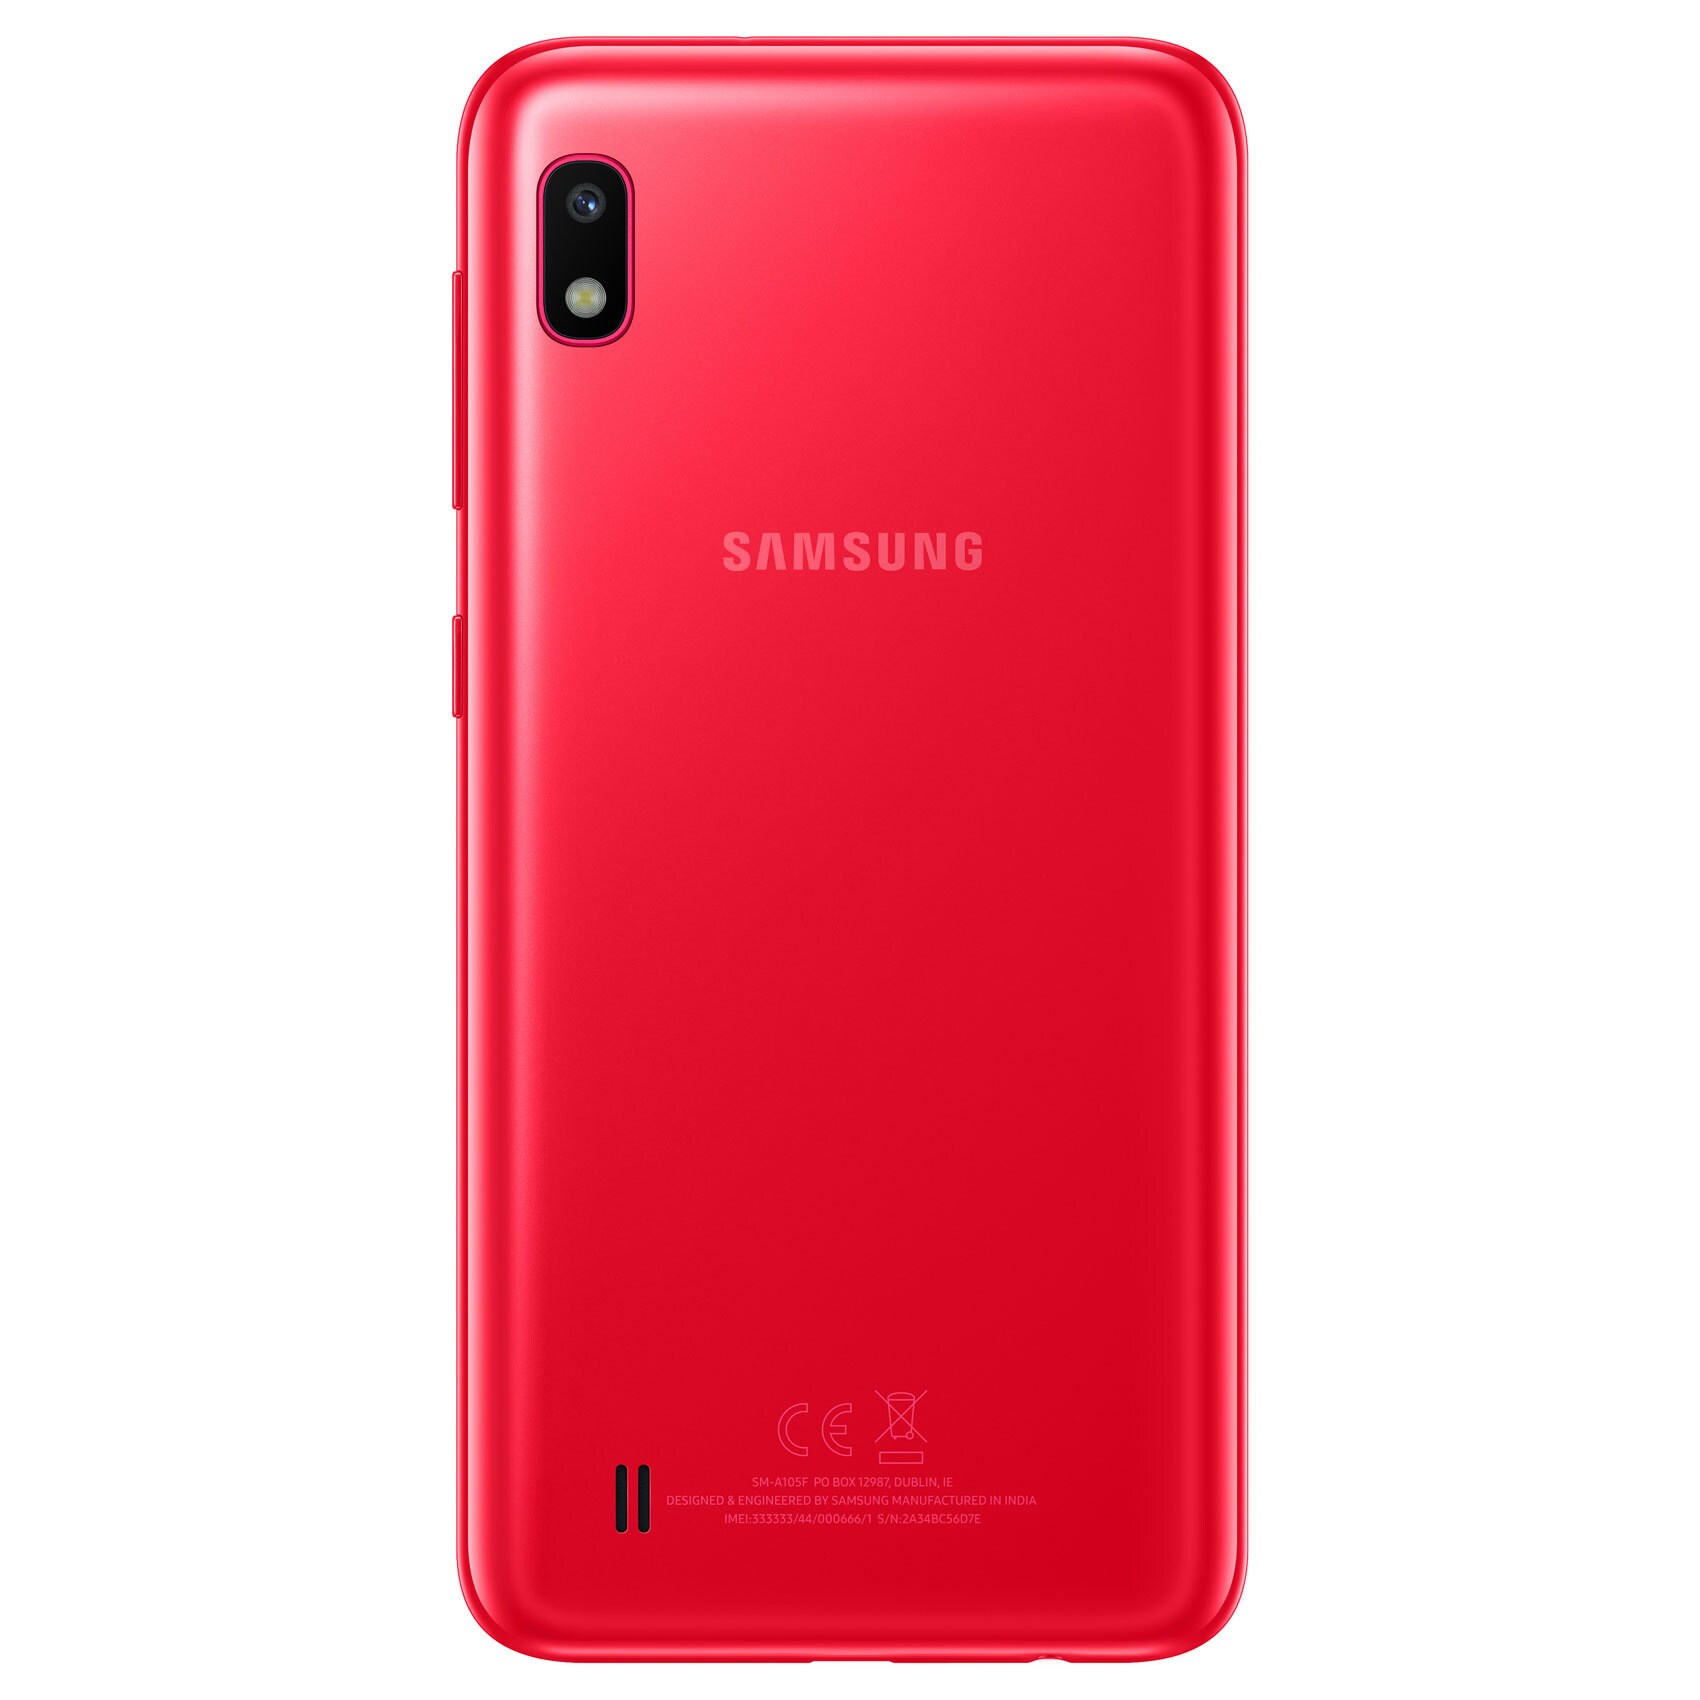 Buy Samsung Galaxy A10 Sm A105f Dual Sim 4g 32gb Red Online Shop Smartphones Tablets Wearables On Carrefour Uae